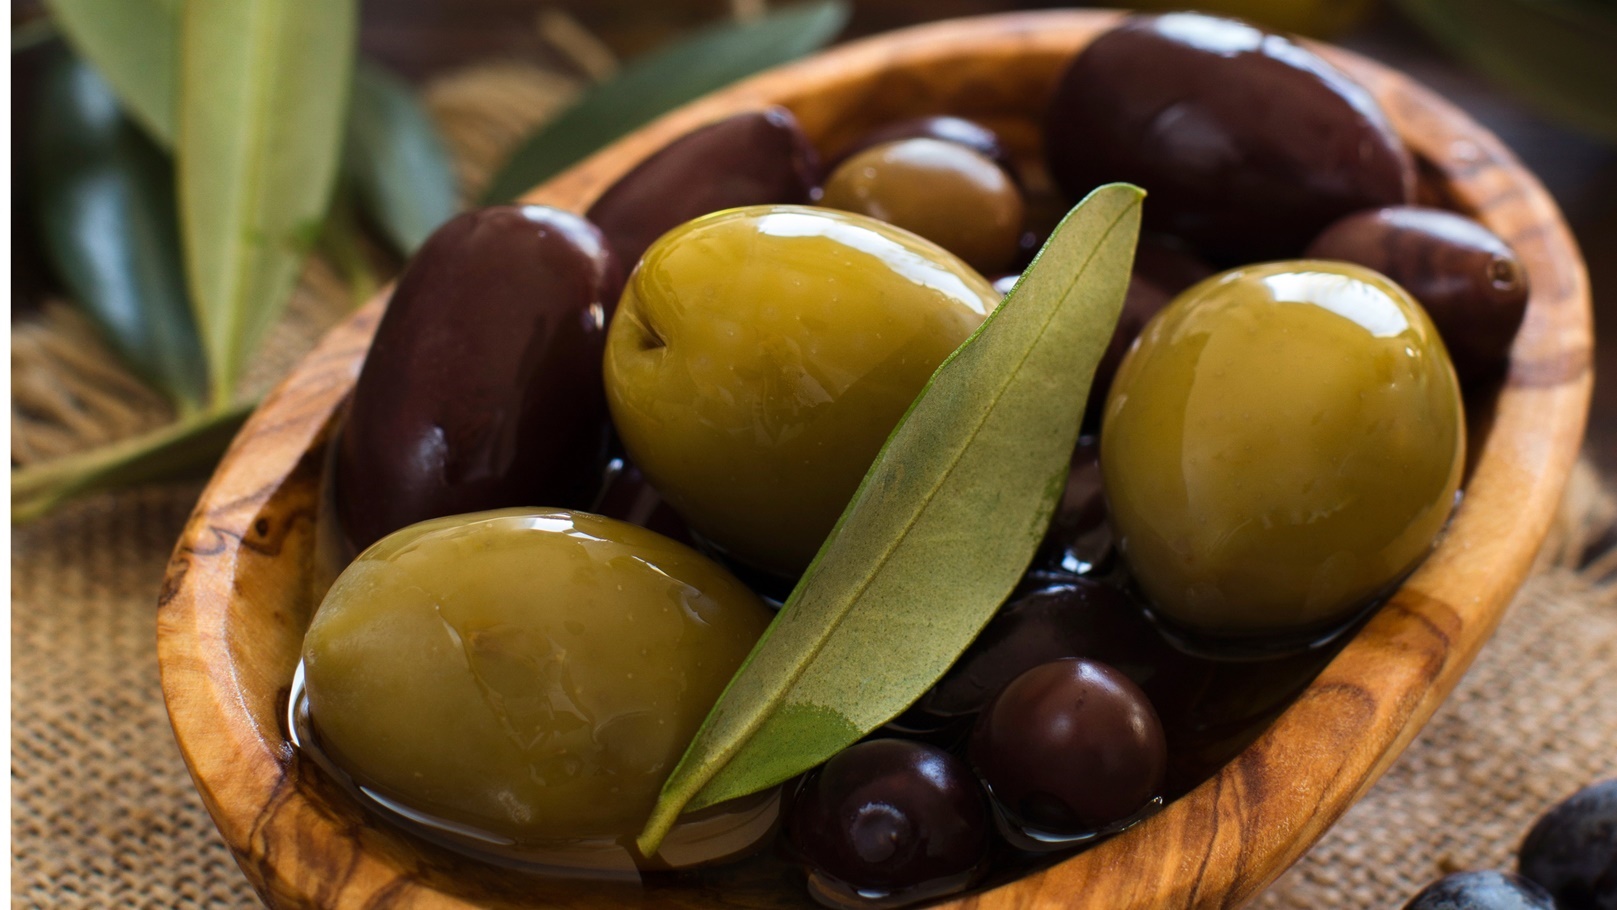 olive-oil-and-olives-on-wood-background-2021-08-26-15-46-24-utc